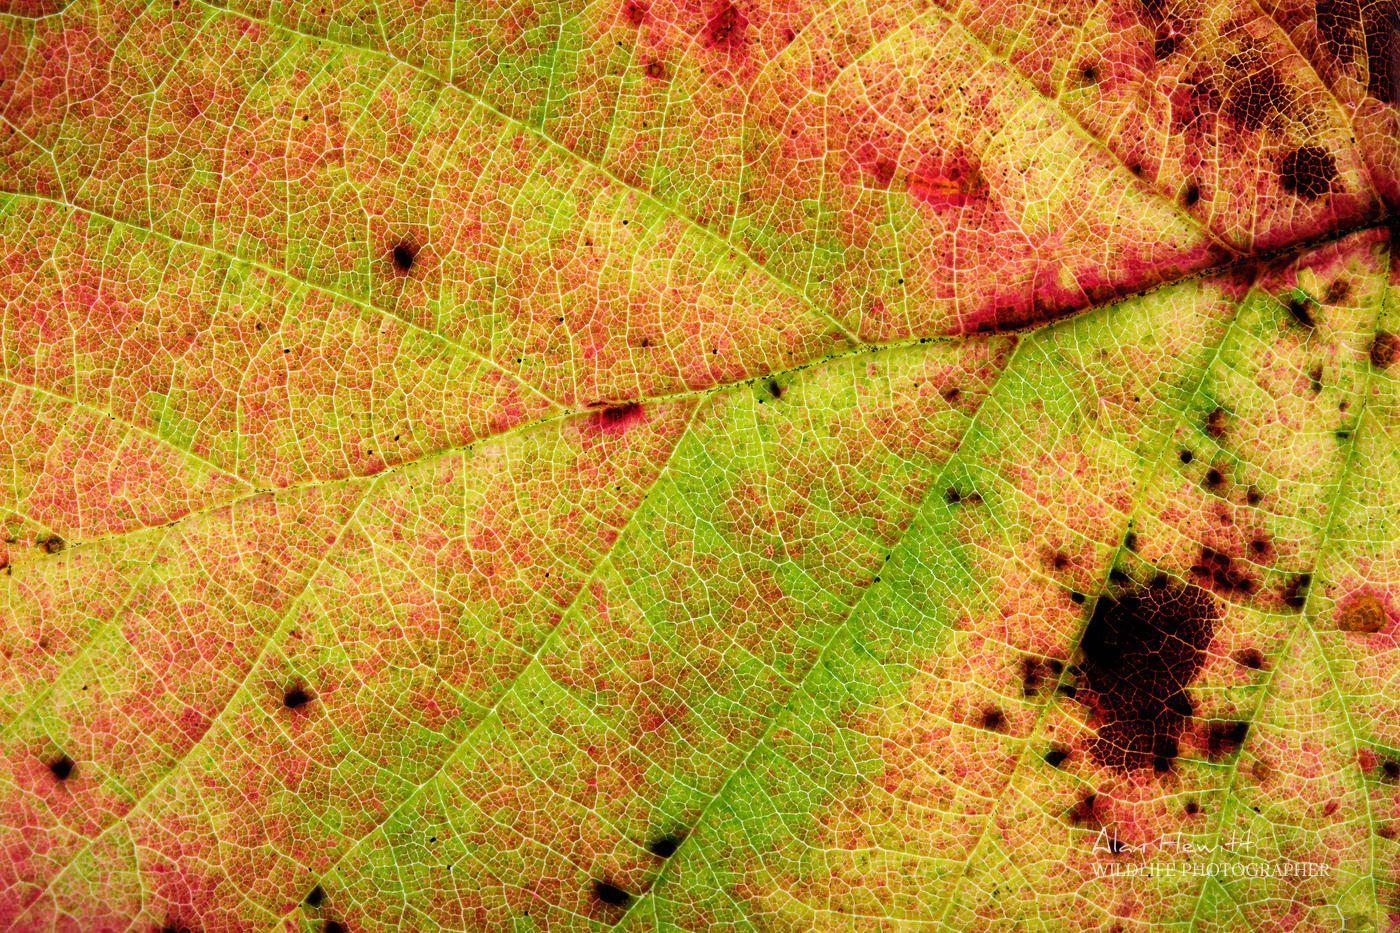 Fujifilm X Story Capturing Macro Autumn Leaves